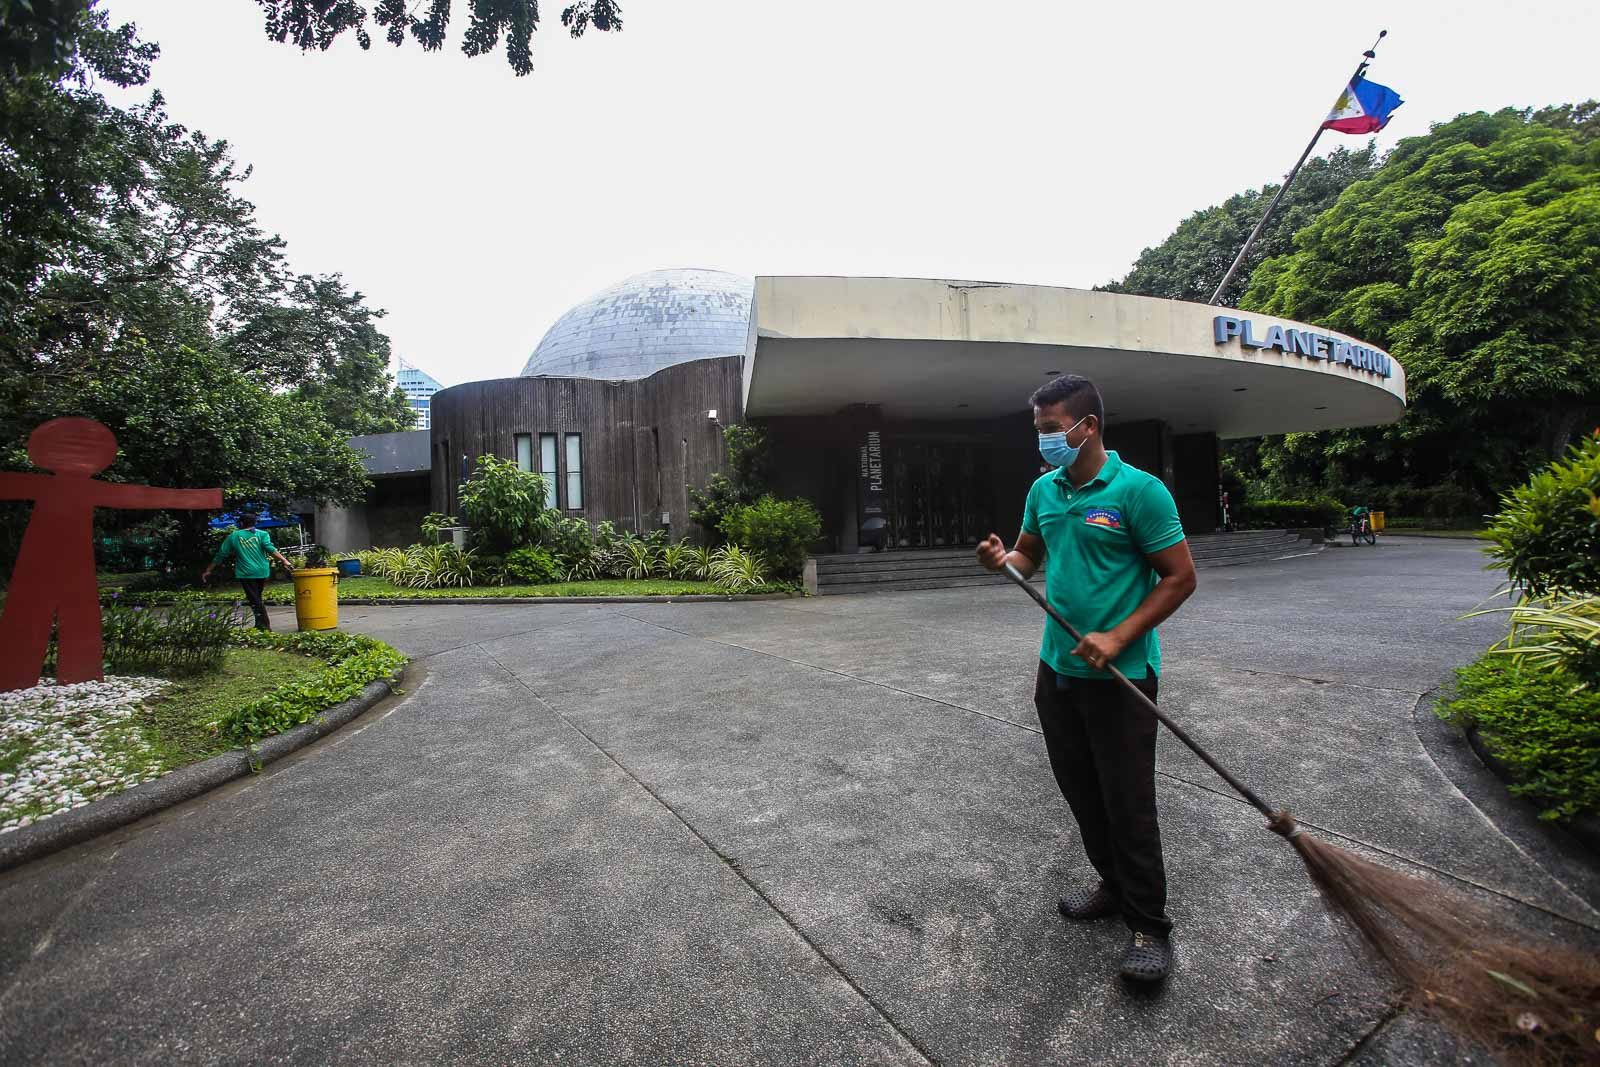 National Planetarium temporarily closes, building set for decommissioning